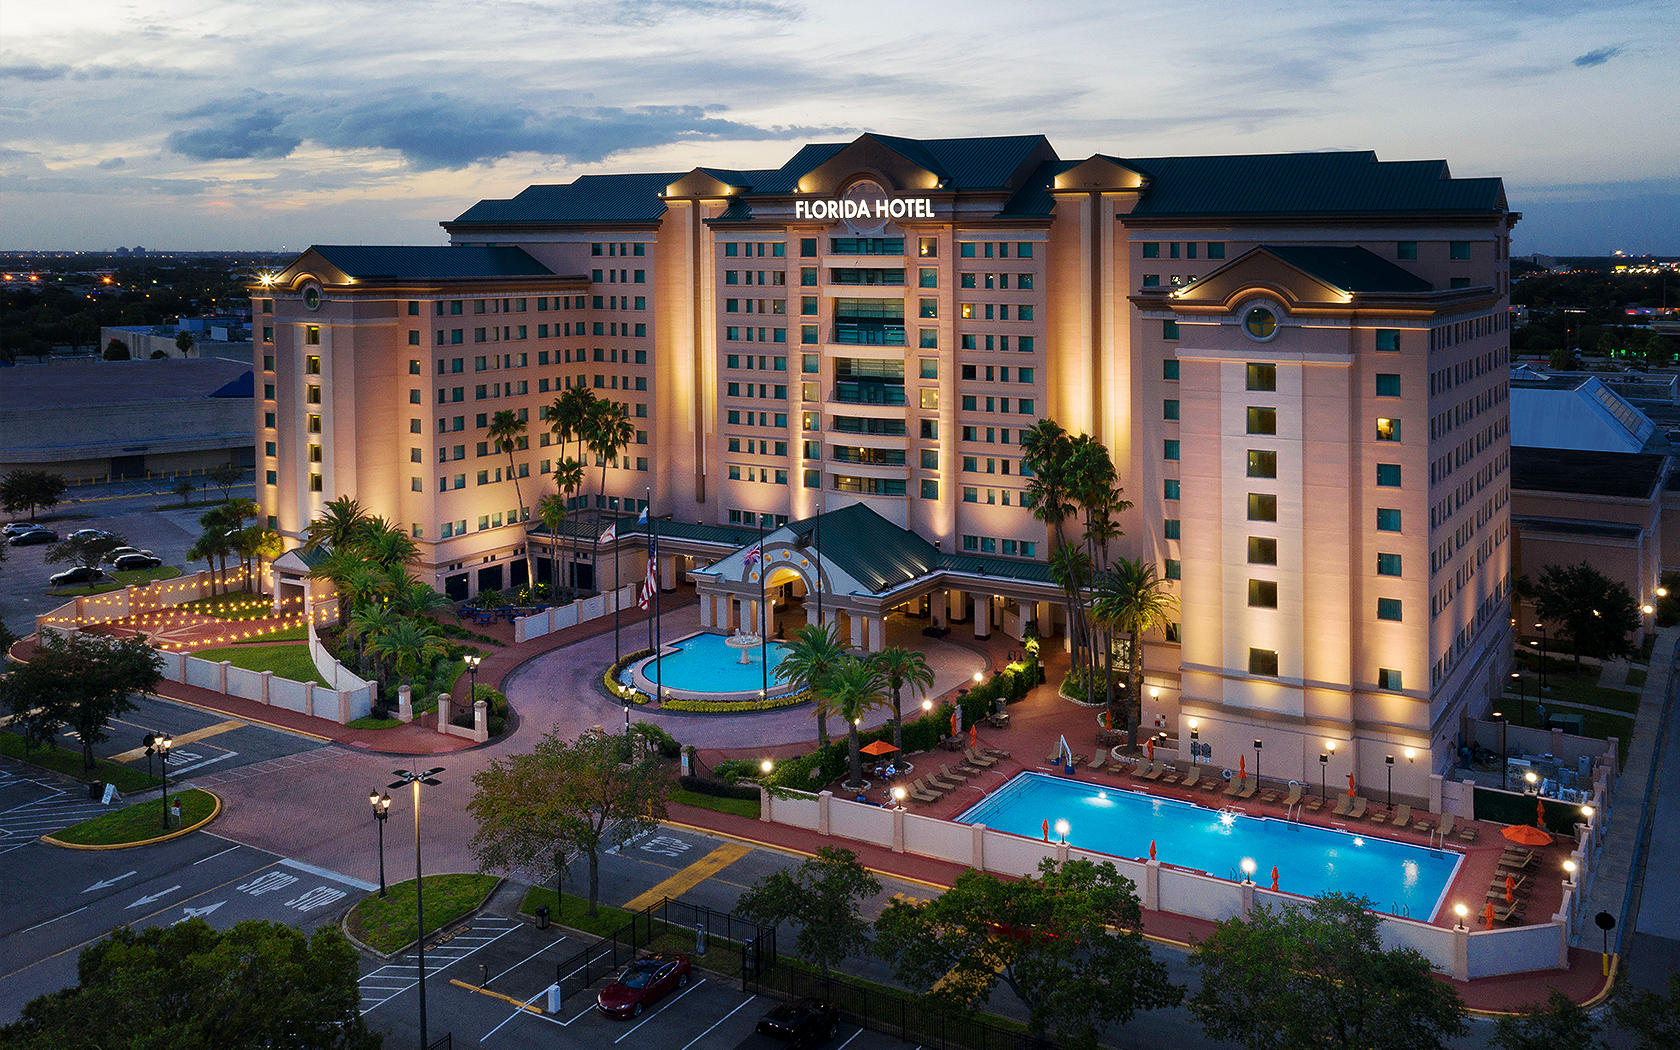 The Florida Hotel - Orlando